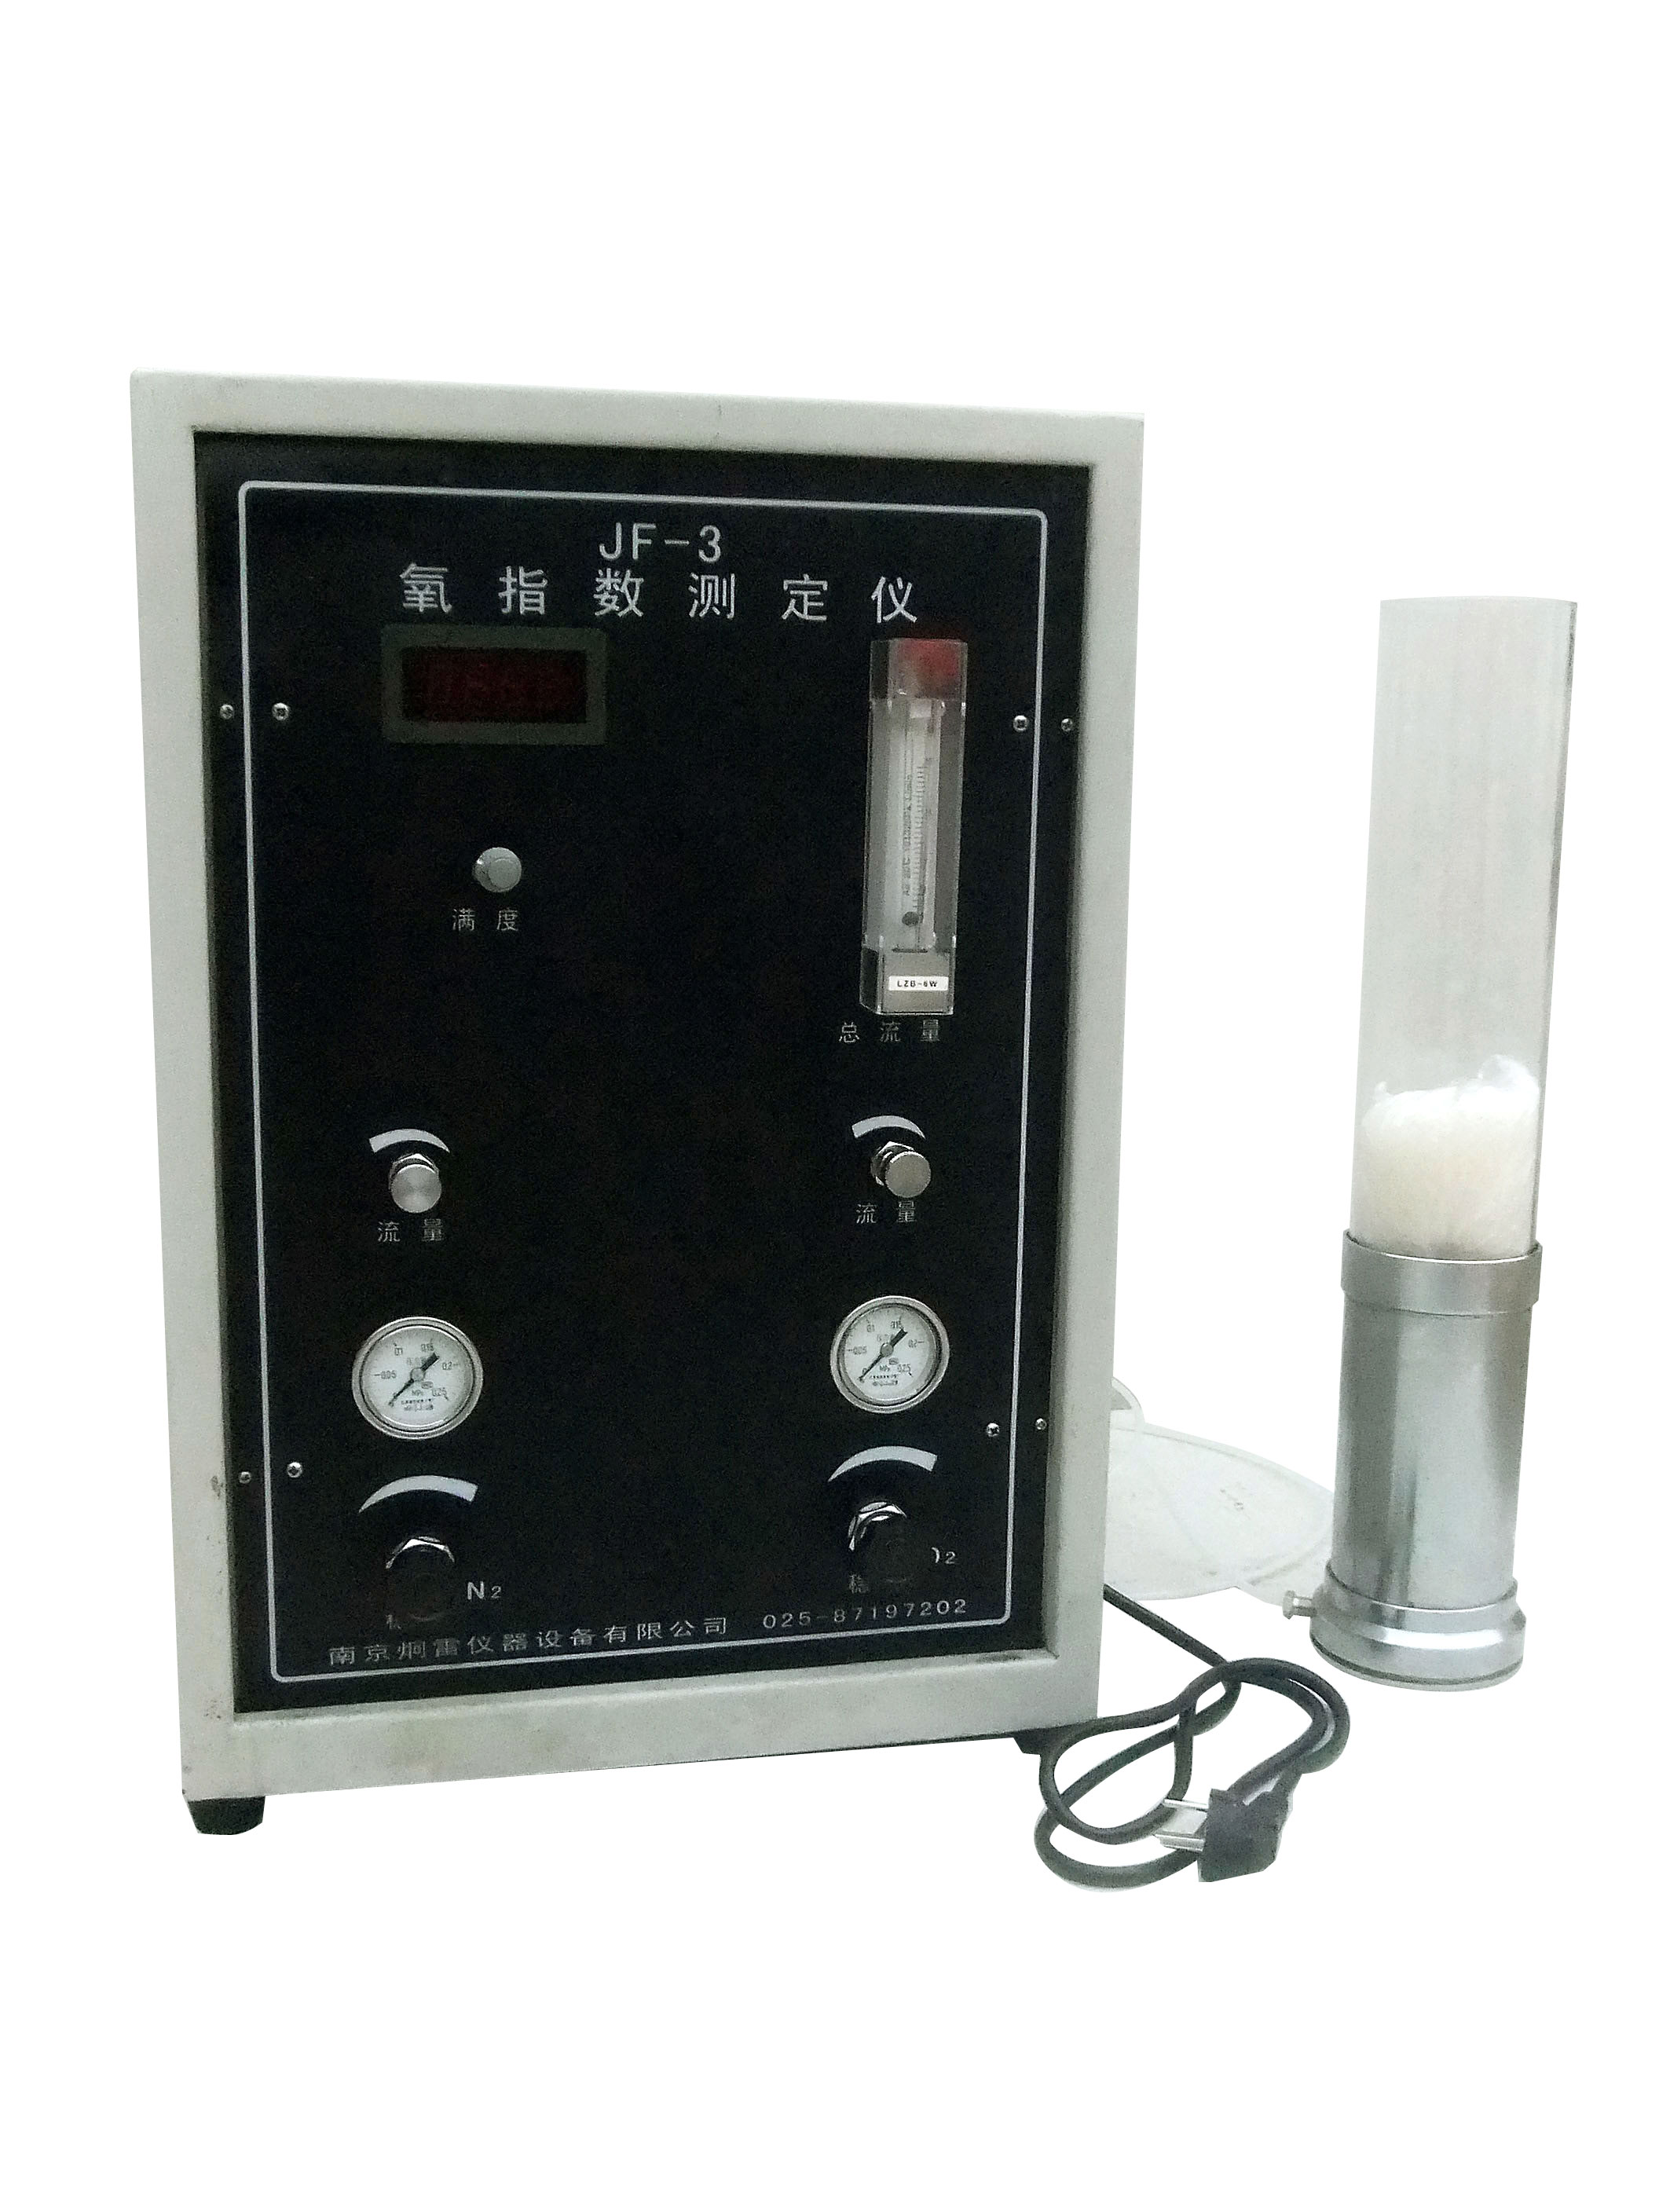 JF-3氧指数测定仪21日交付新疆盛华新型保温材料有限公司使用 